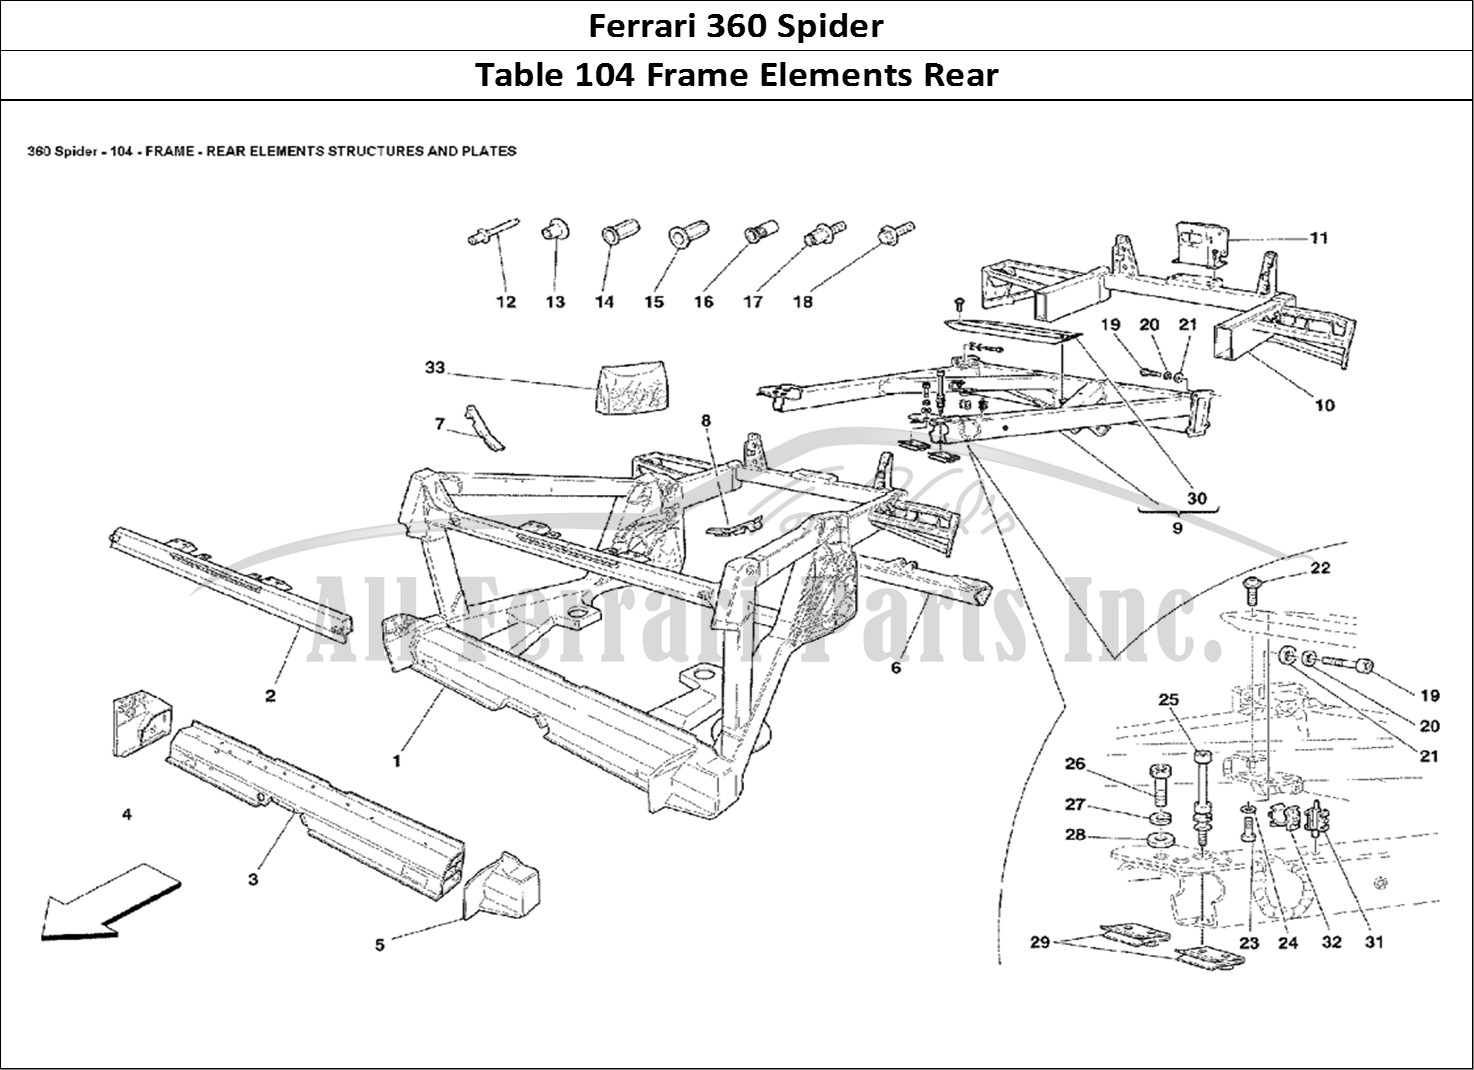 Ferrari Parts Ferrari 360 Spider Page 104 Frame - Rear Elements Str